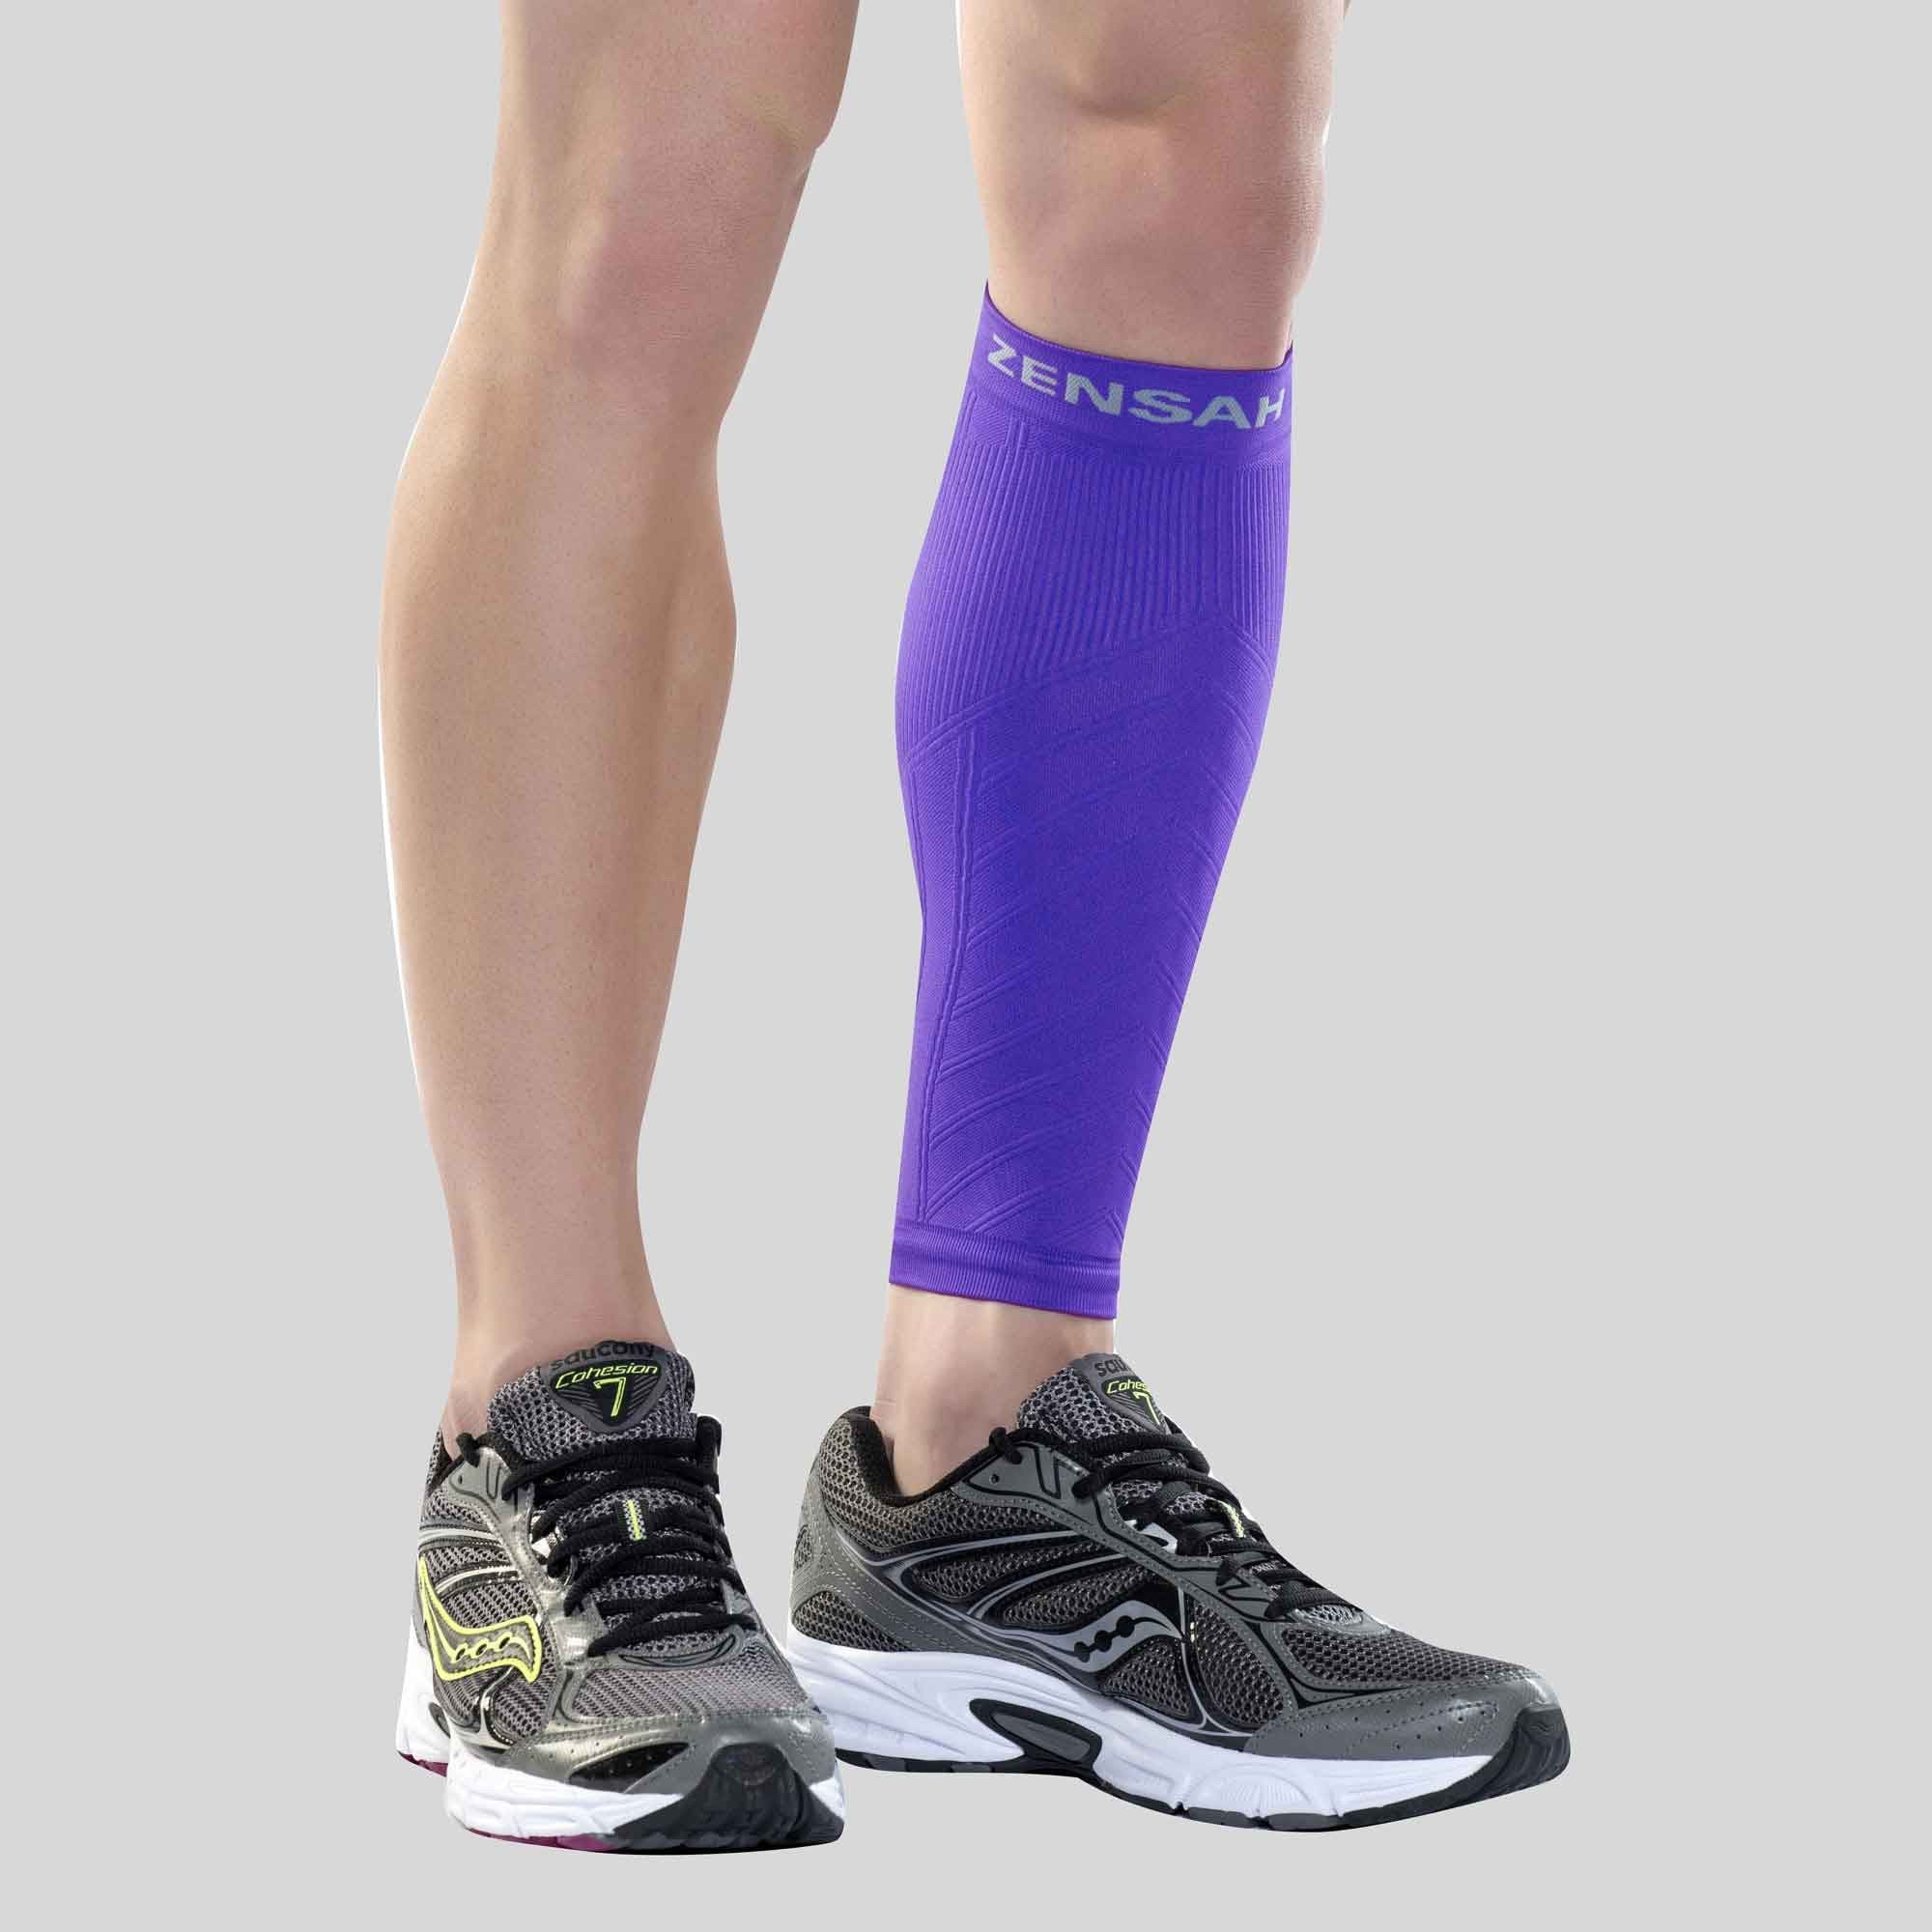 Calf Compression Sleeves Leg Compression Socks Shin Splint Calf Pain Relief  